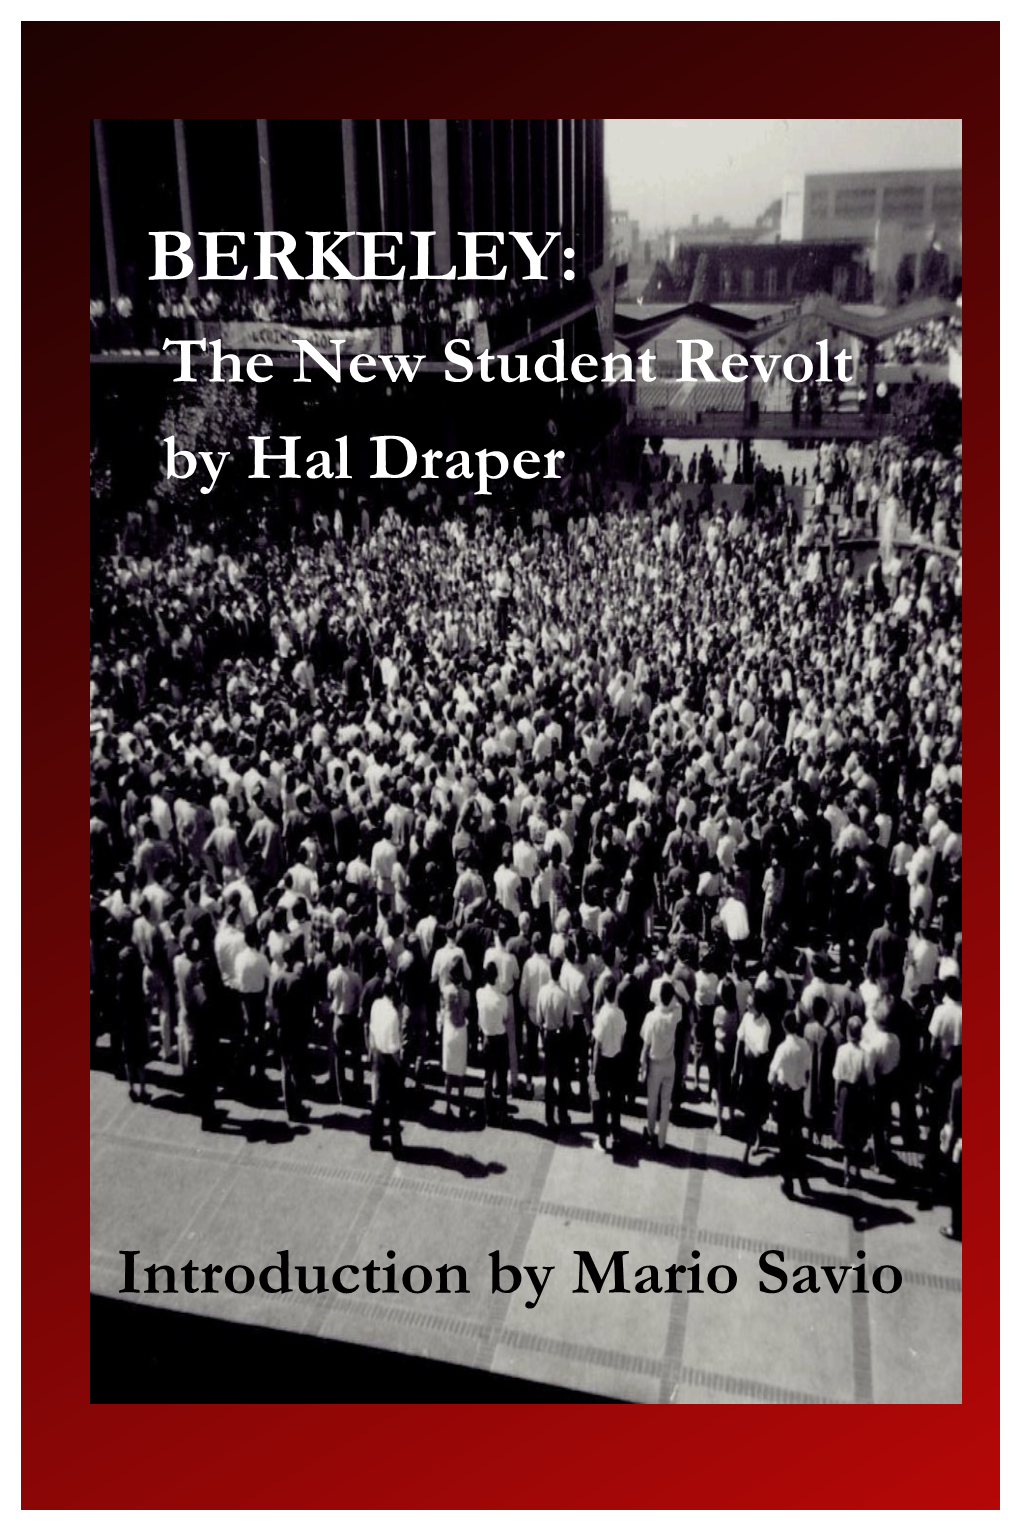 BERKELEY: the New Student Revolt by Hal Draper